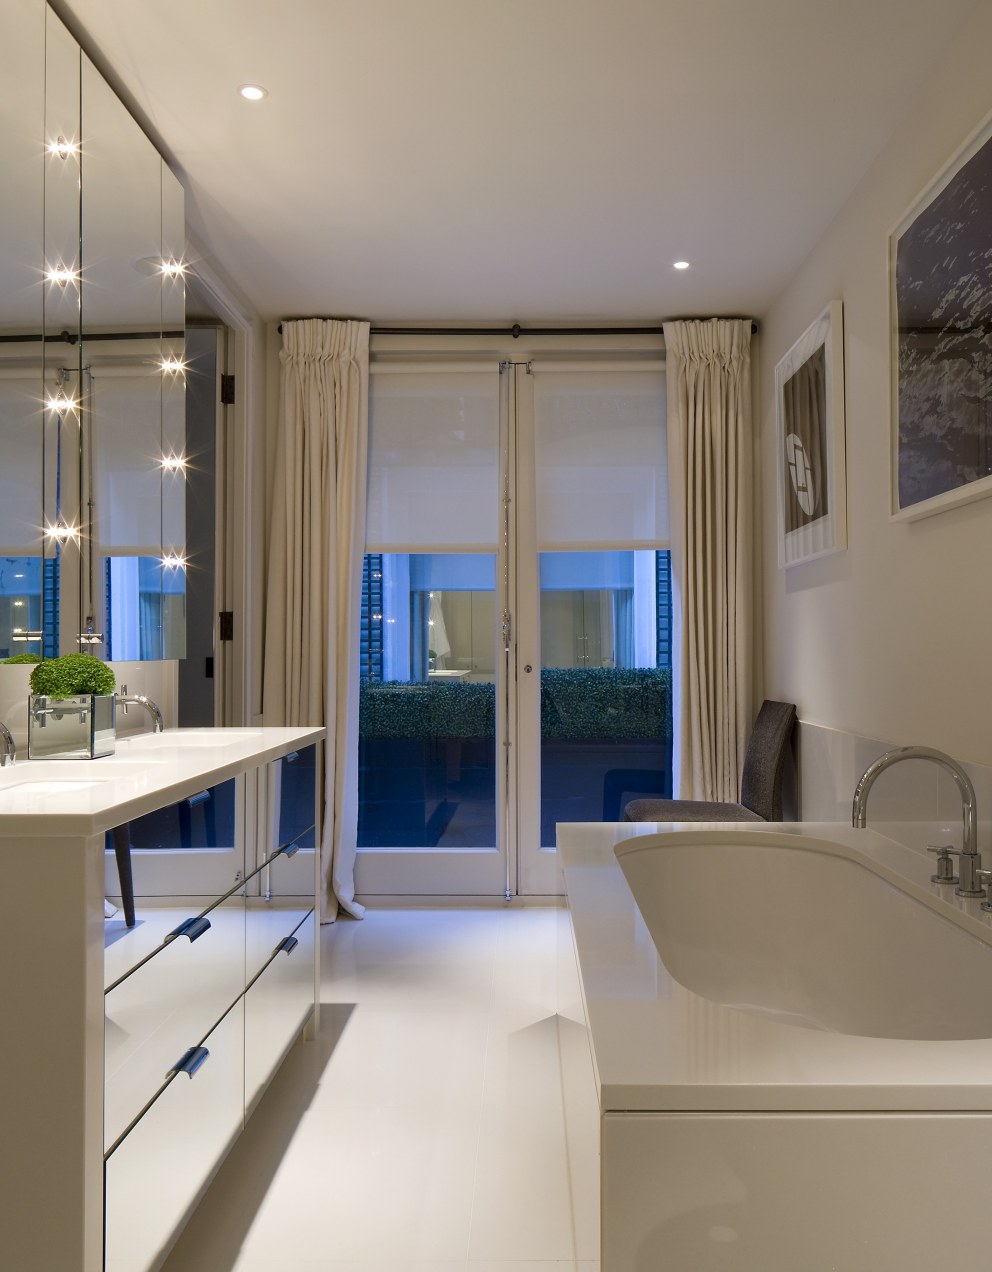 Bachelor's Apartment | Bathroom | Interior Designers